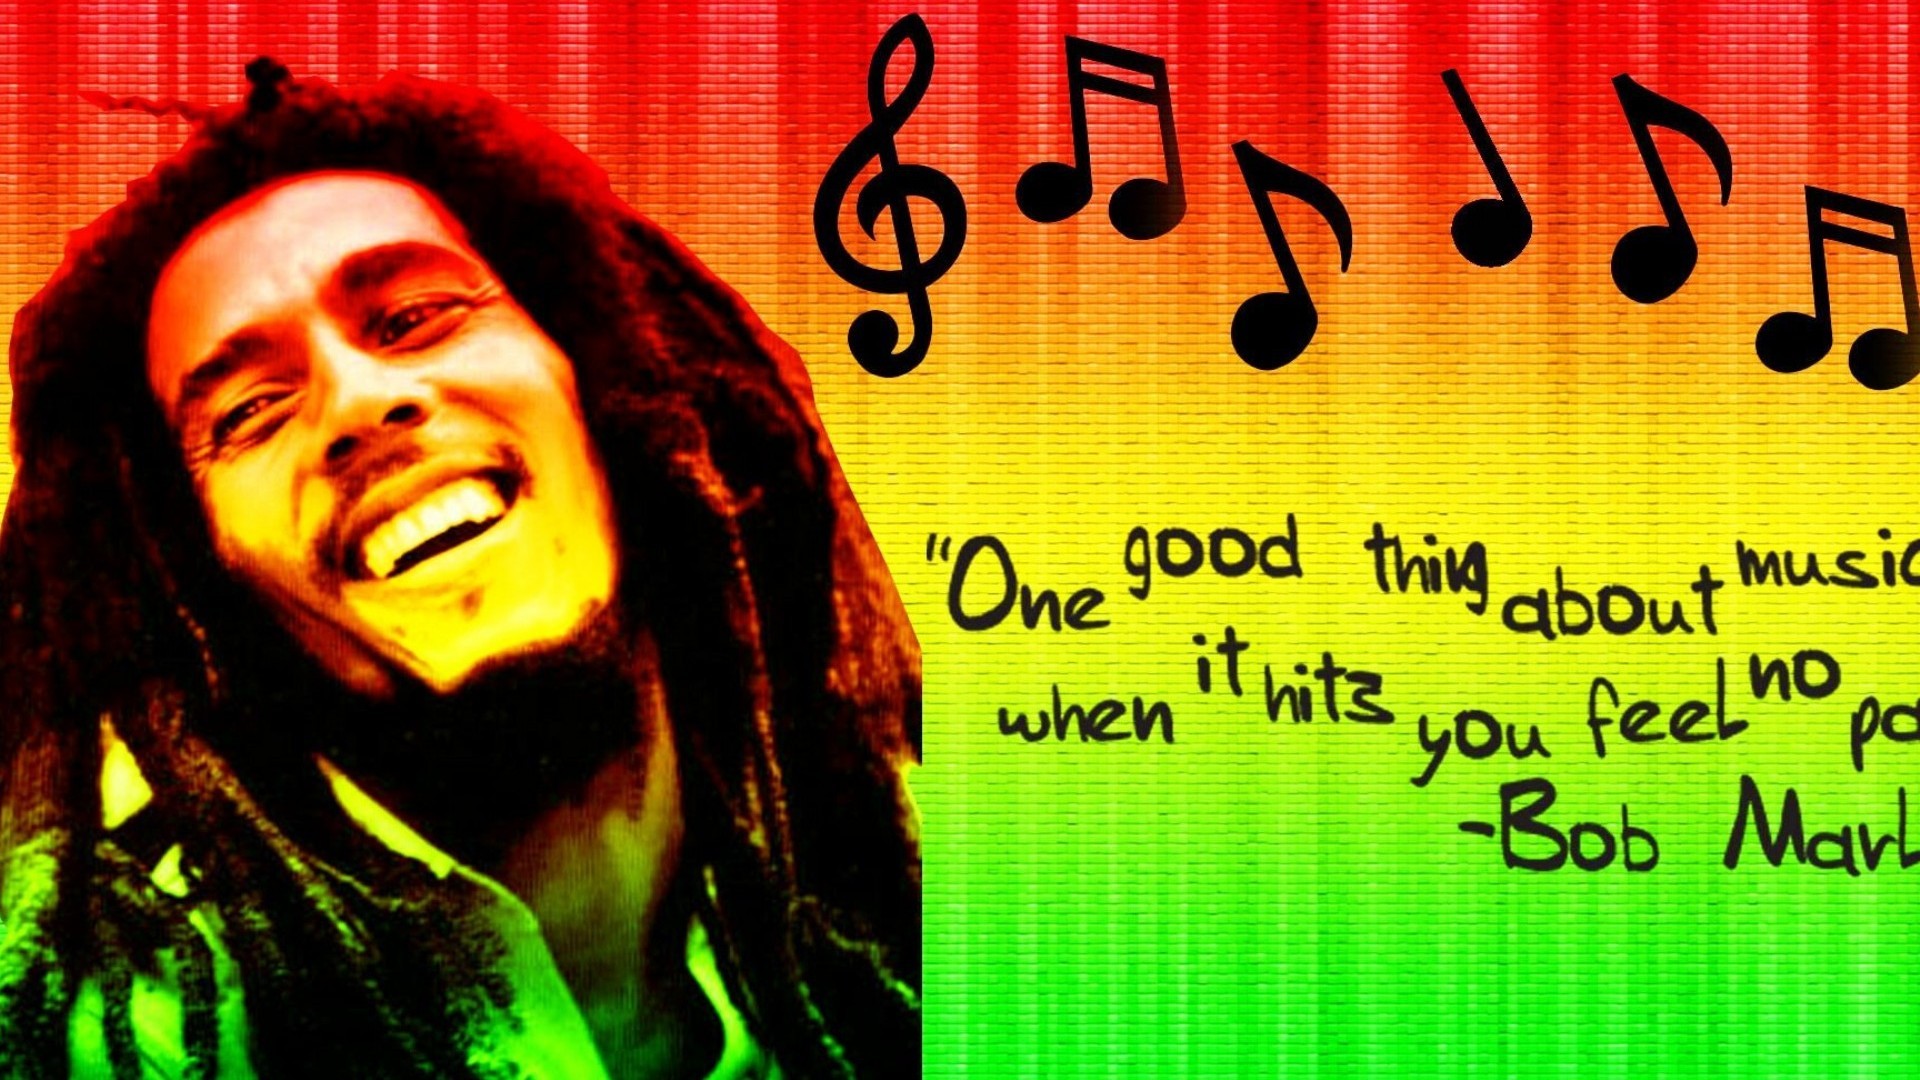 Bob Marley Wallpaper High Resolution And Quality